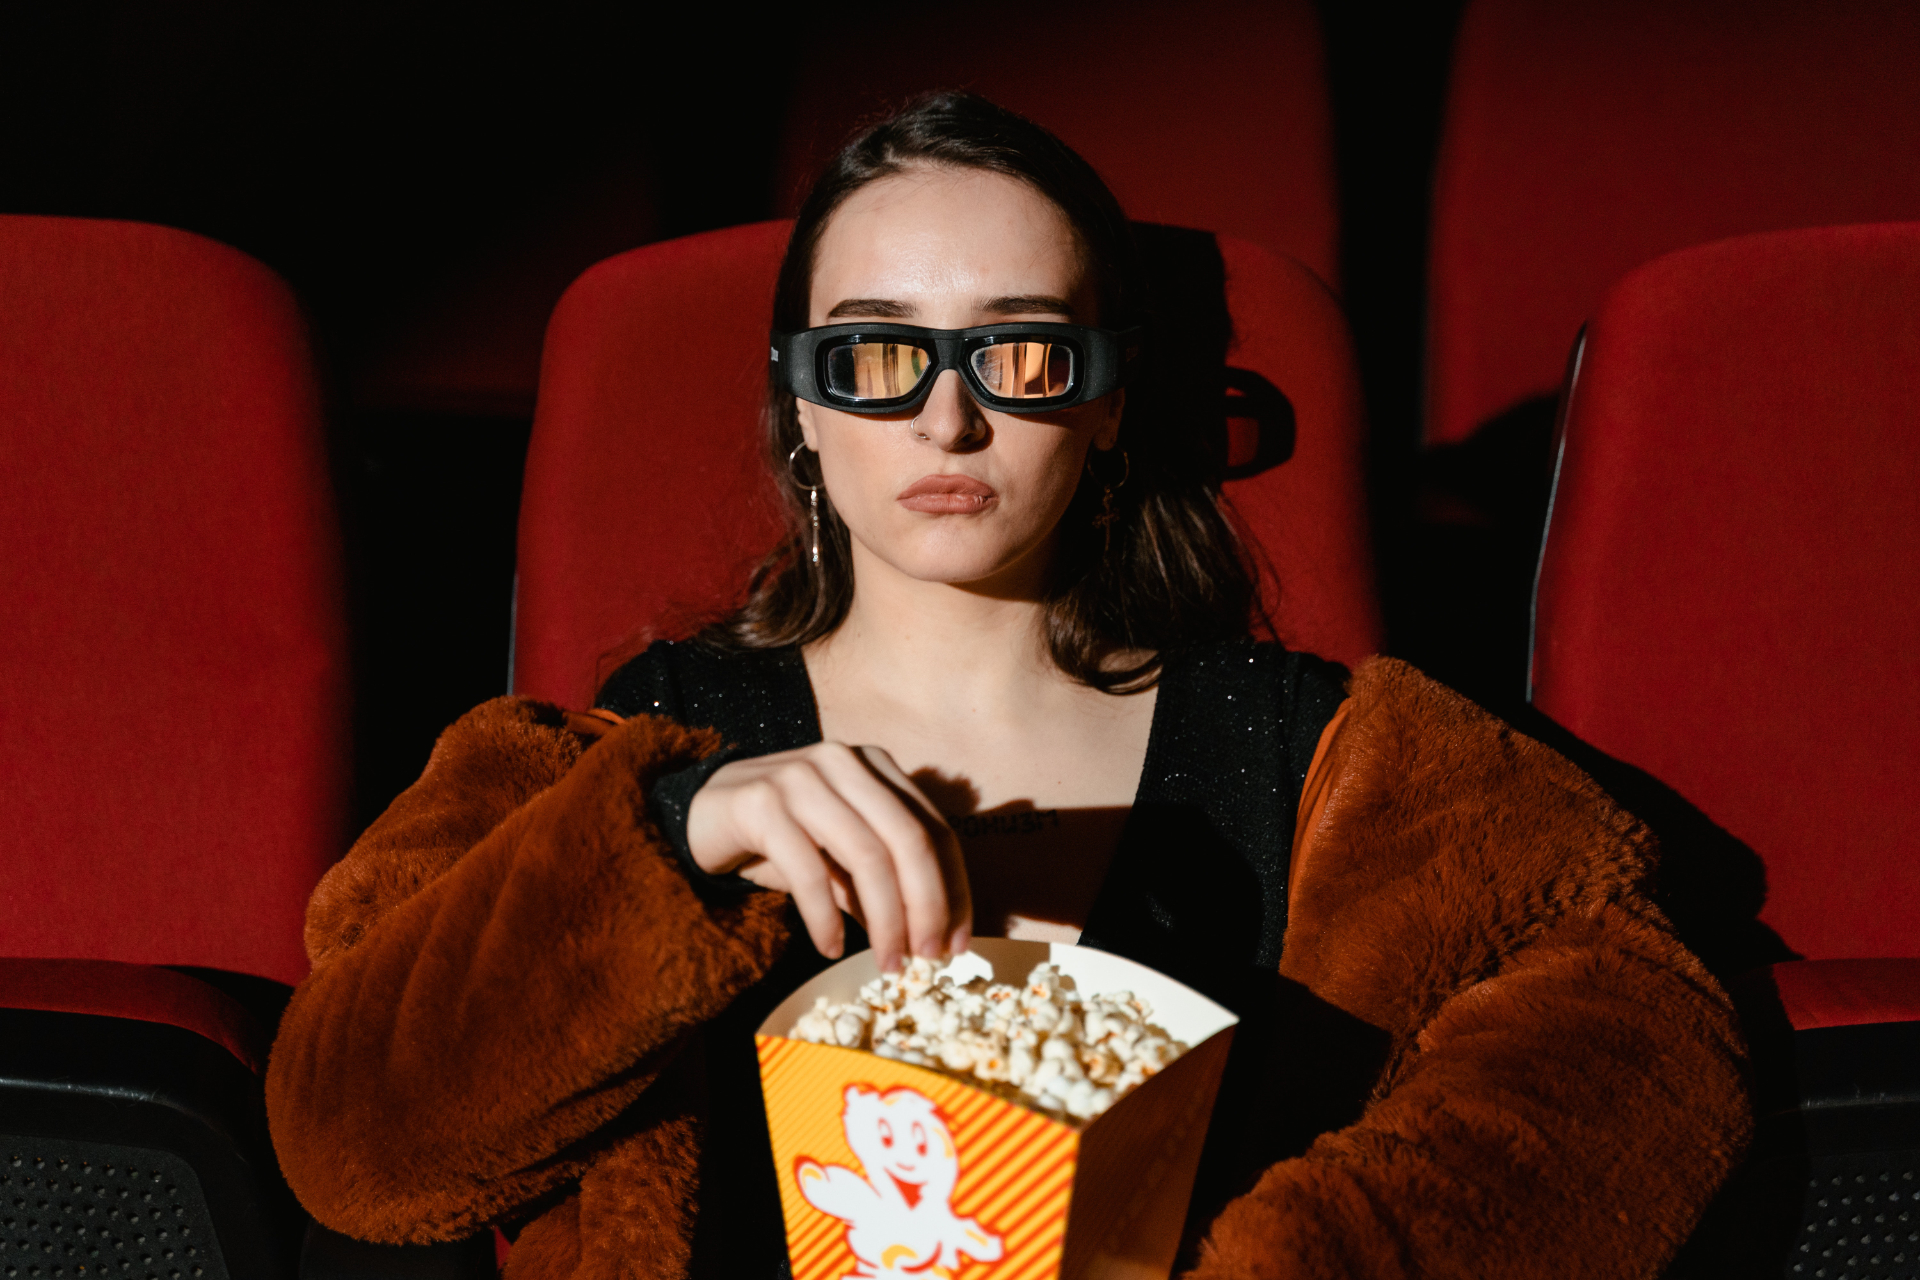 'Woman Watching a Movie Holding a Box of Popcorn' by [Tima Miroshnichenko](https://www.pexels.com/photo/woman-watching-a-movie-holding-a-box-of-popcorn-7991576/).